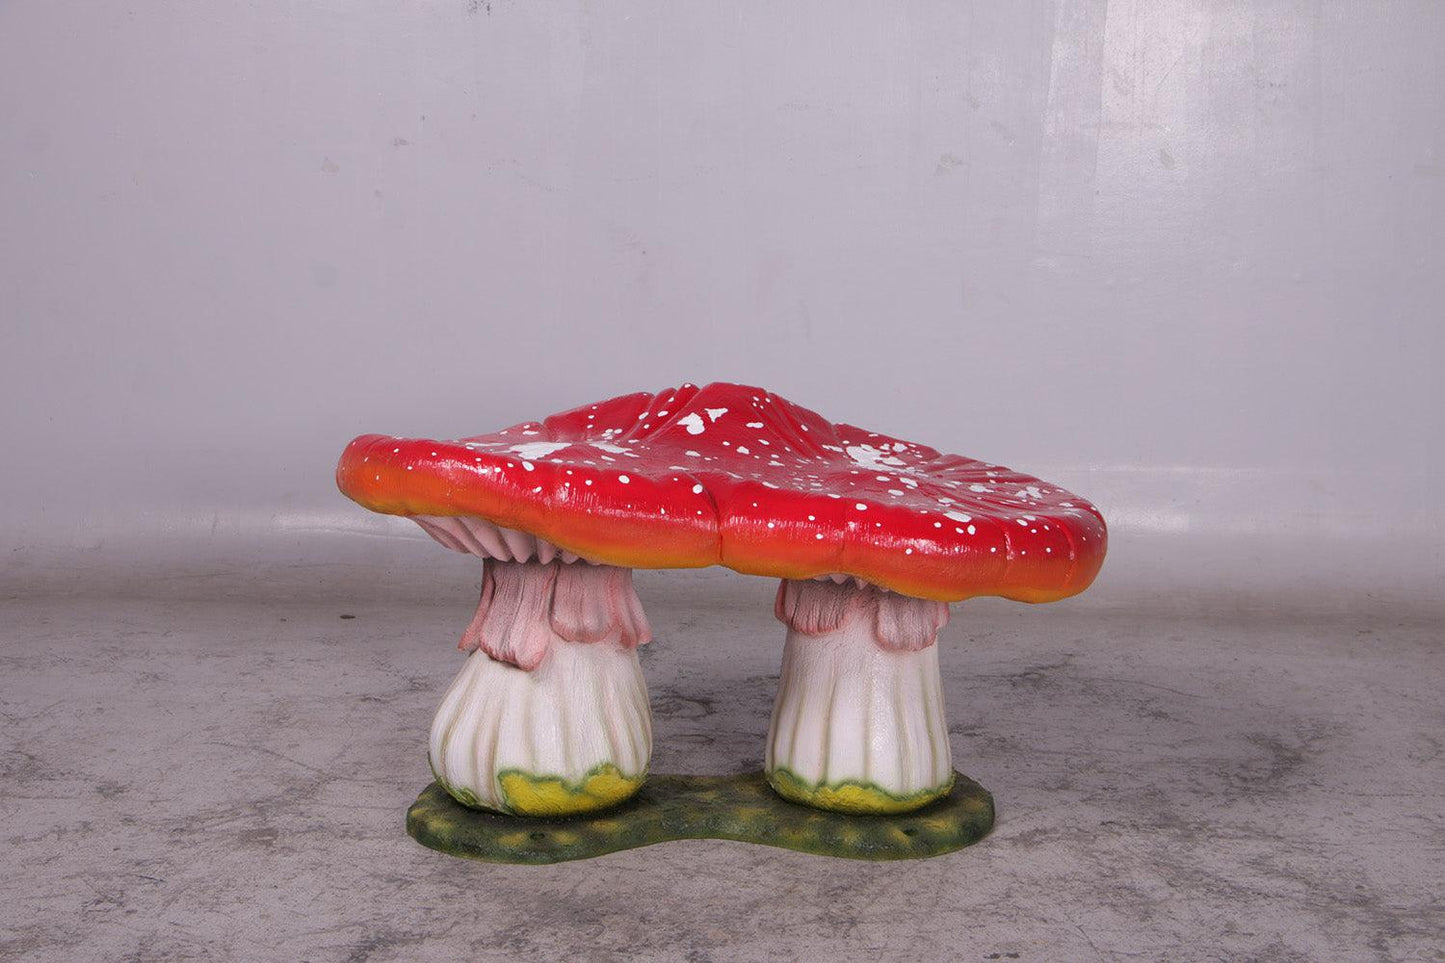 Red Double Mushroom Stool Statue - LM Treasures Prop Rentals 